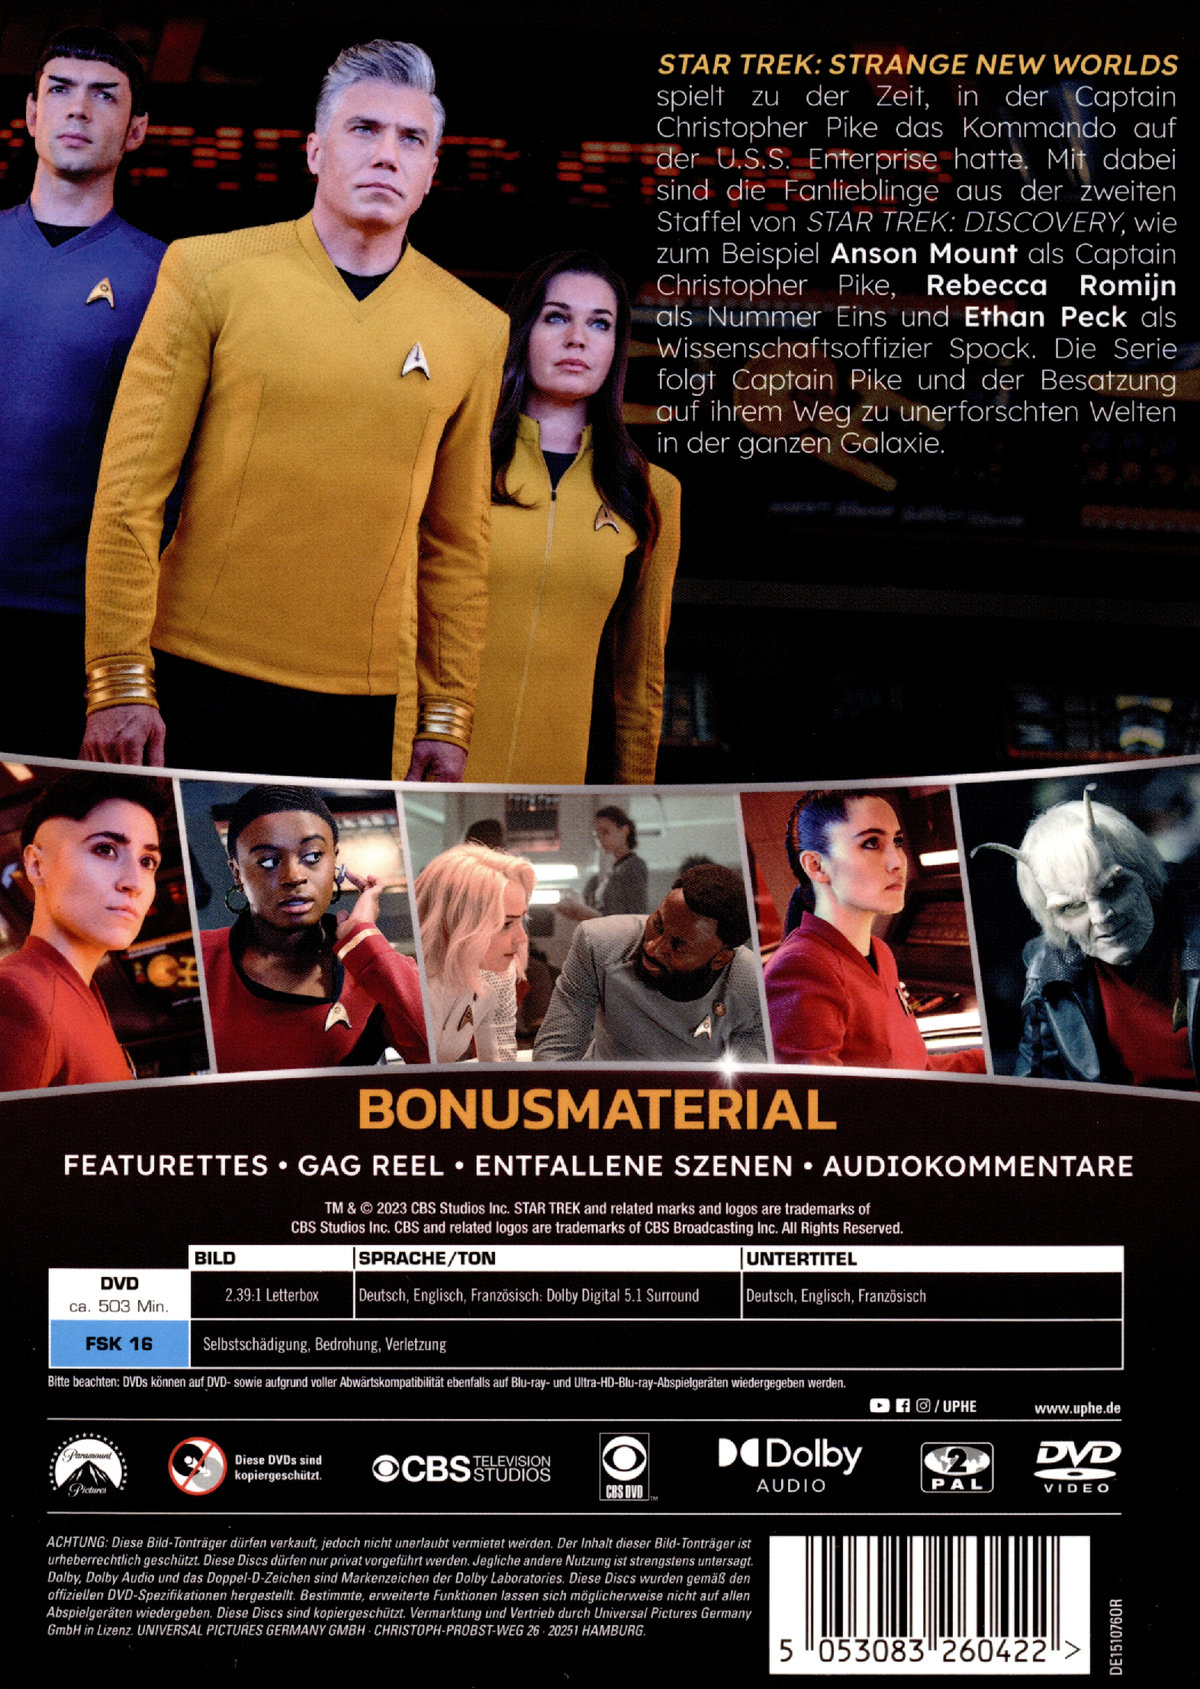 Star Trek: Strange New Worlds - Staffel 1  [4 DVDs]  (DVD)